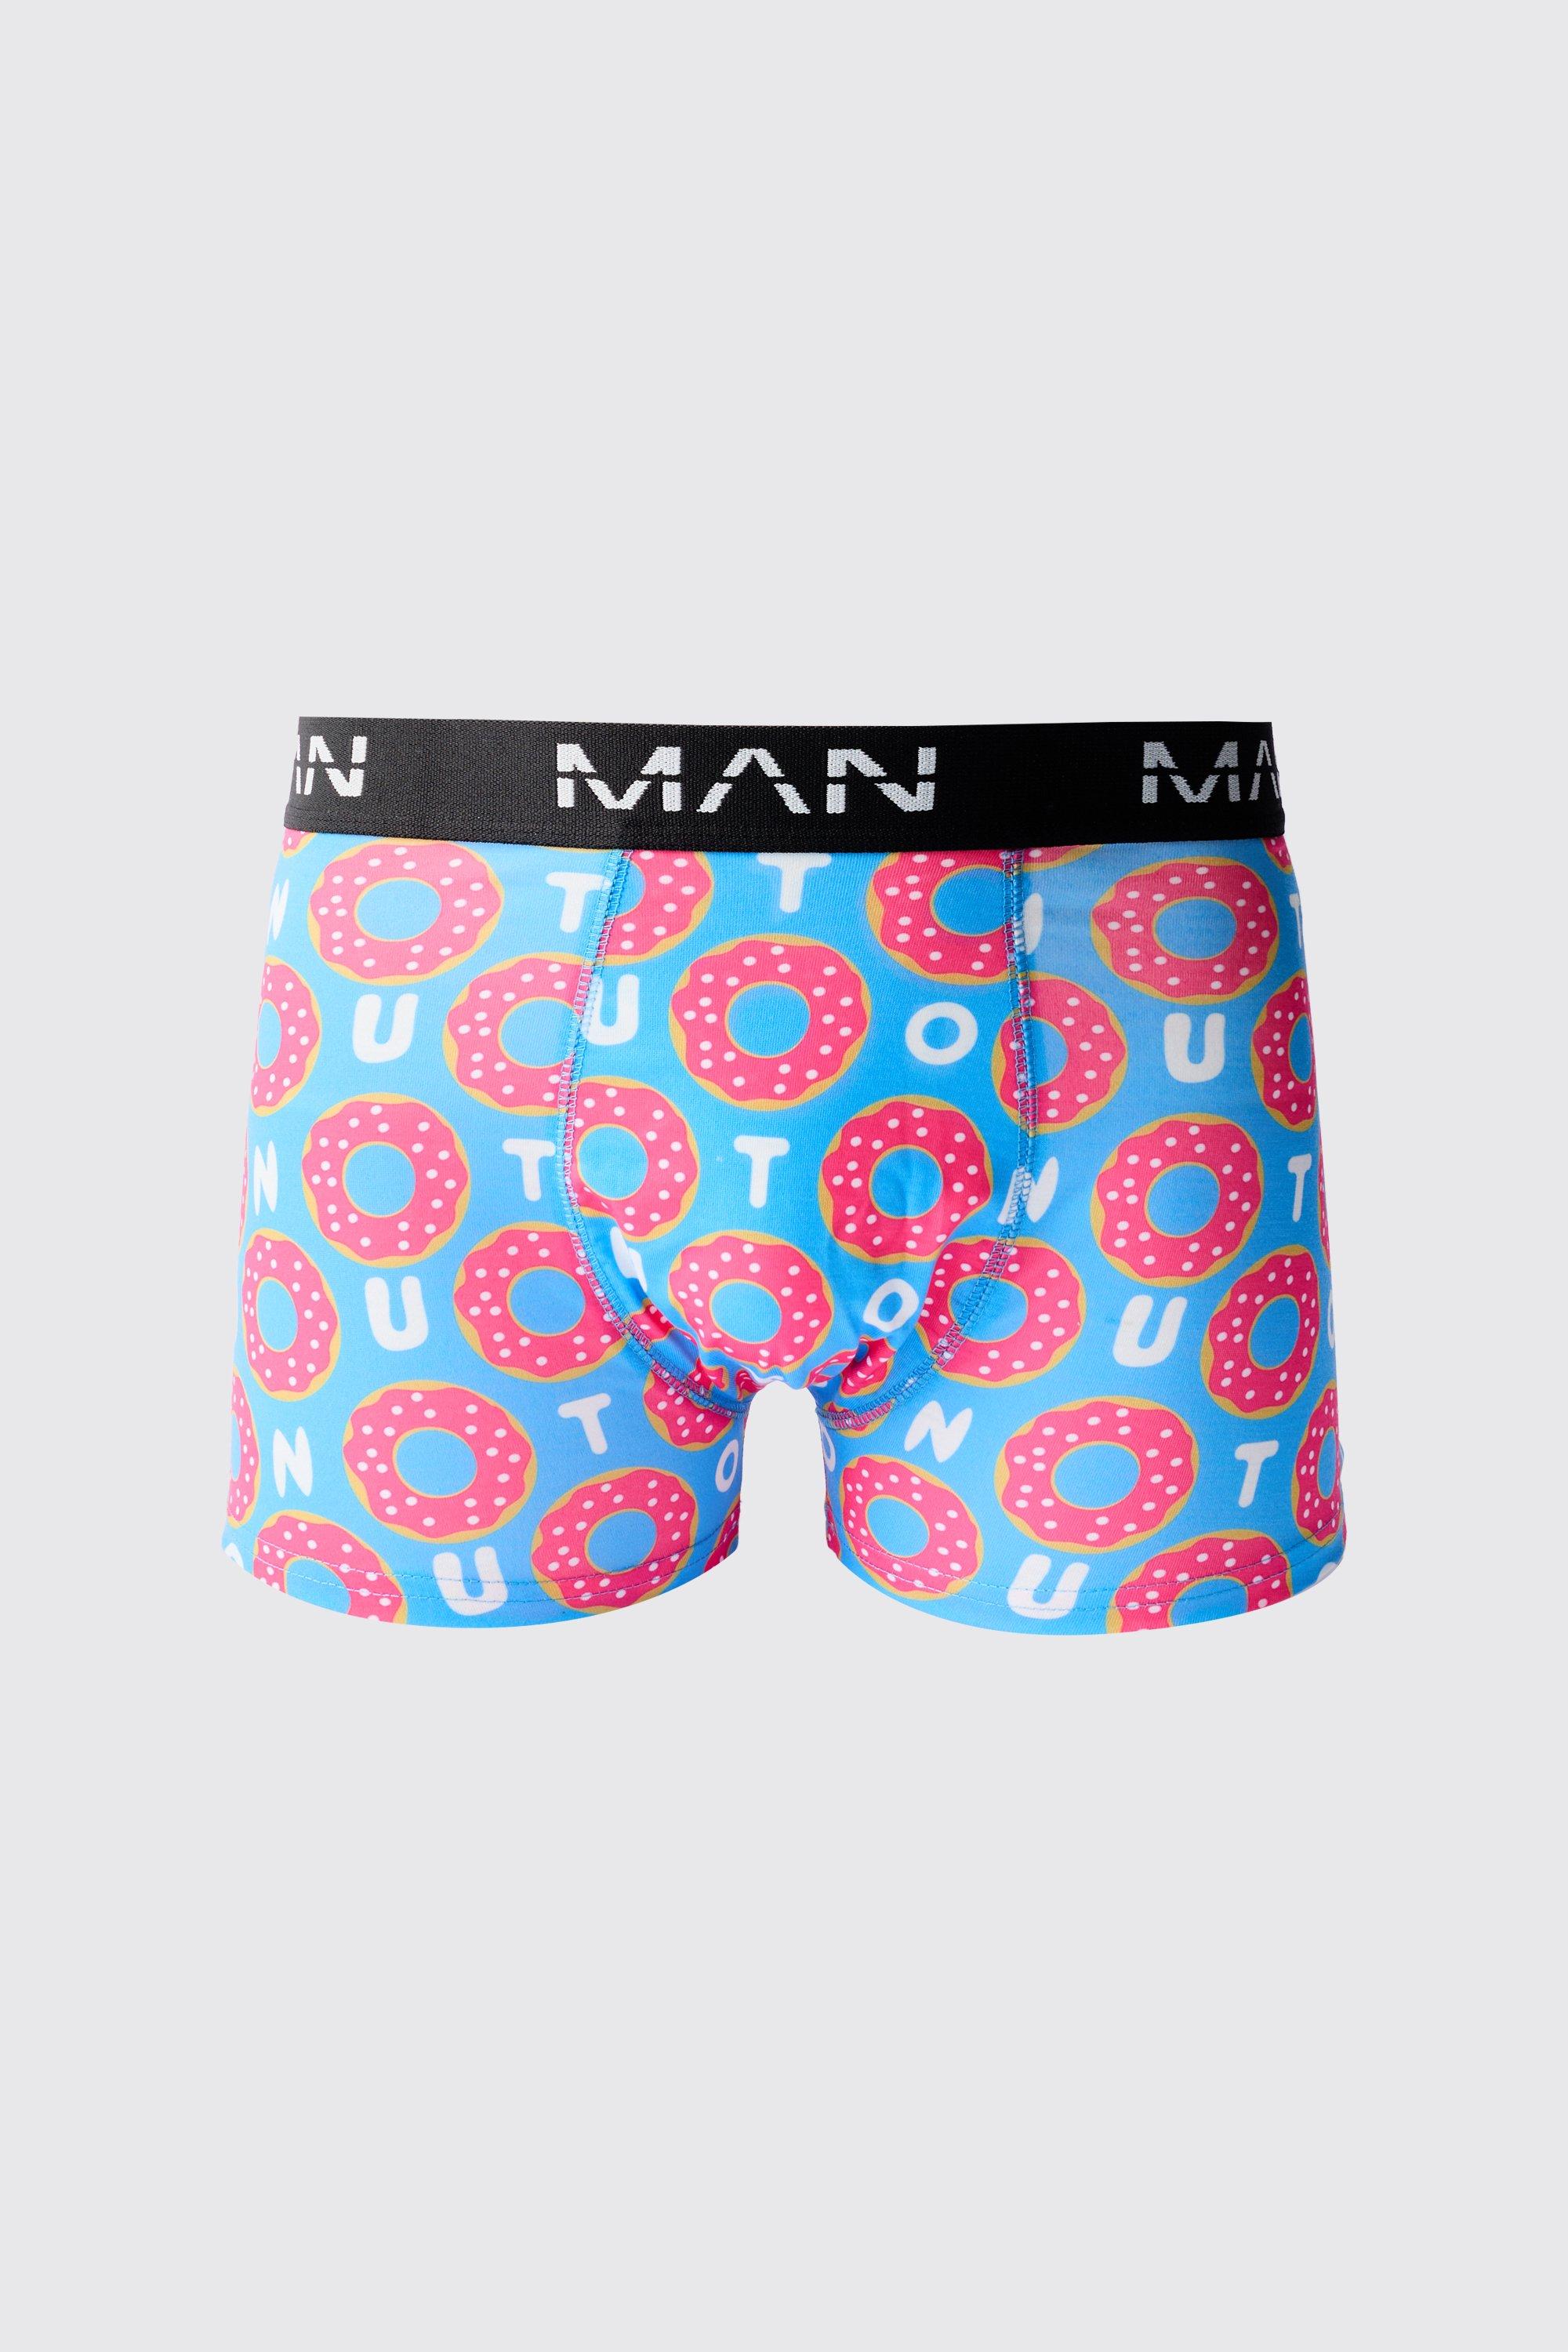 men's man donut slogan printed boxers - multi - s, multi